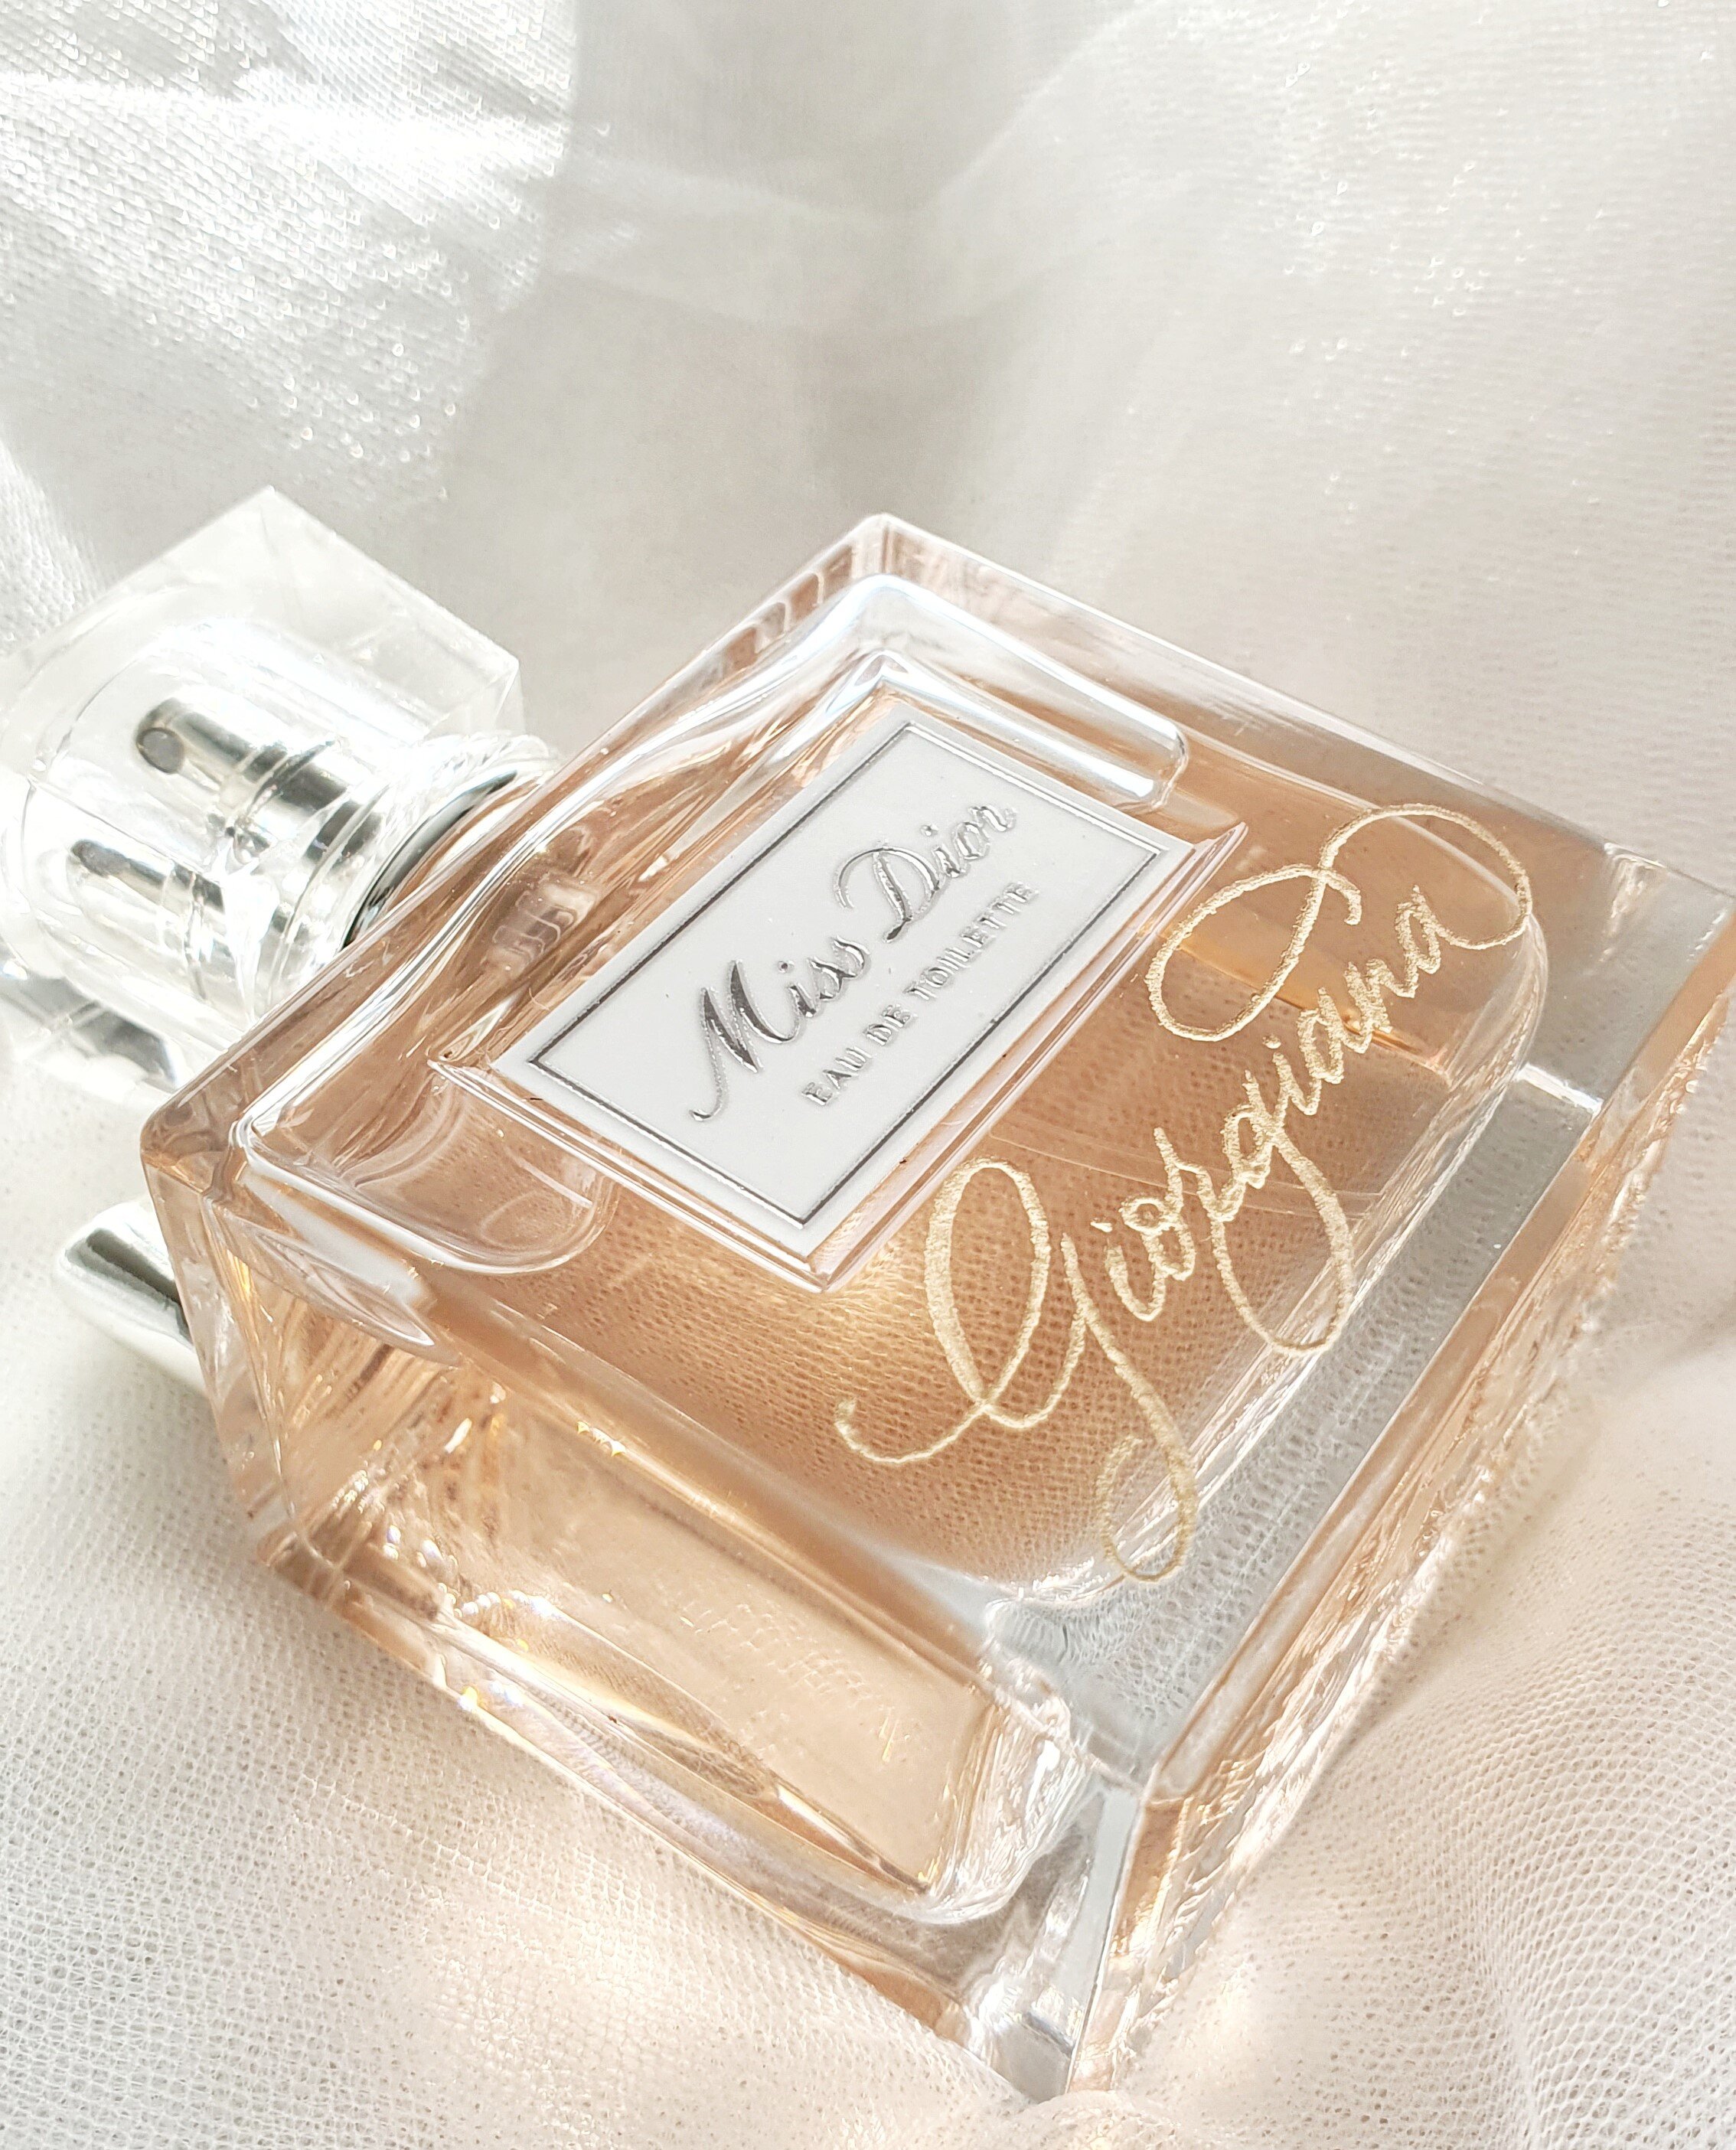 chanel engraved perfume